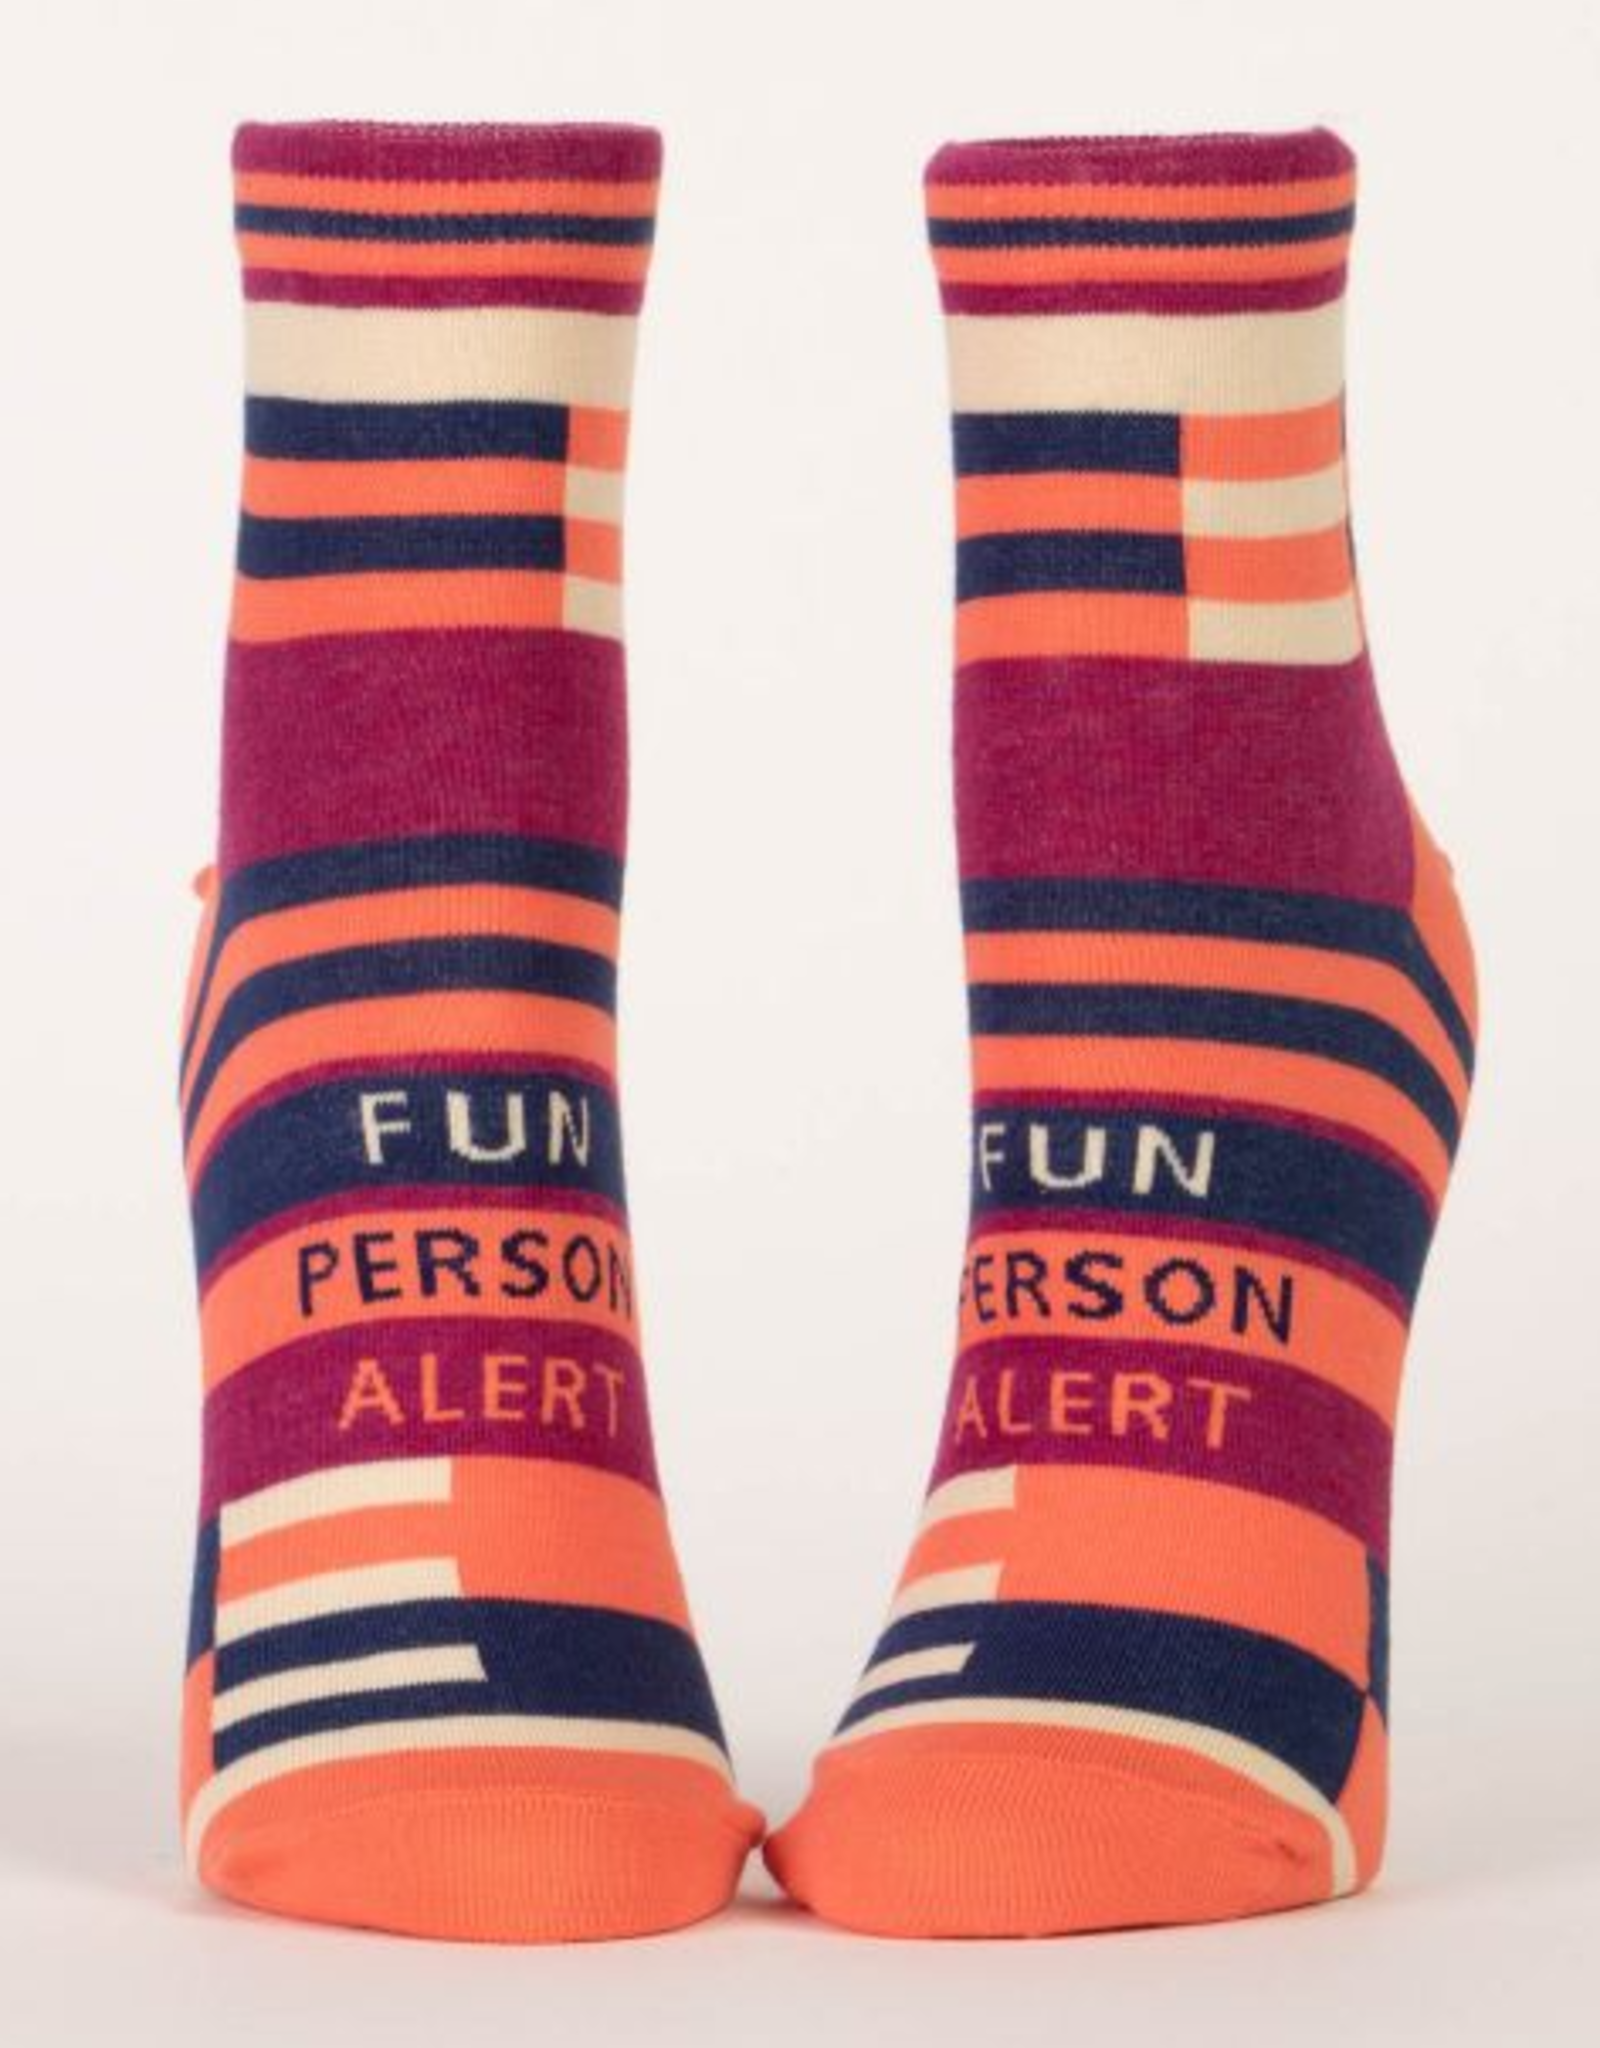 Blue Q Women's Ankle Socks - Fun Person Alert